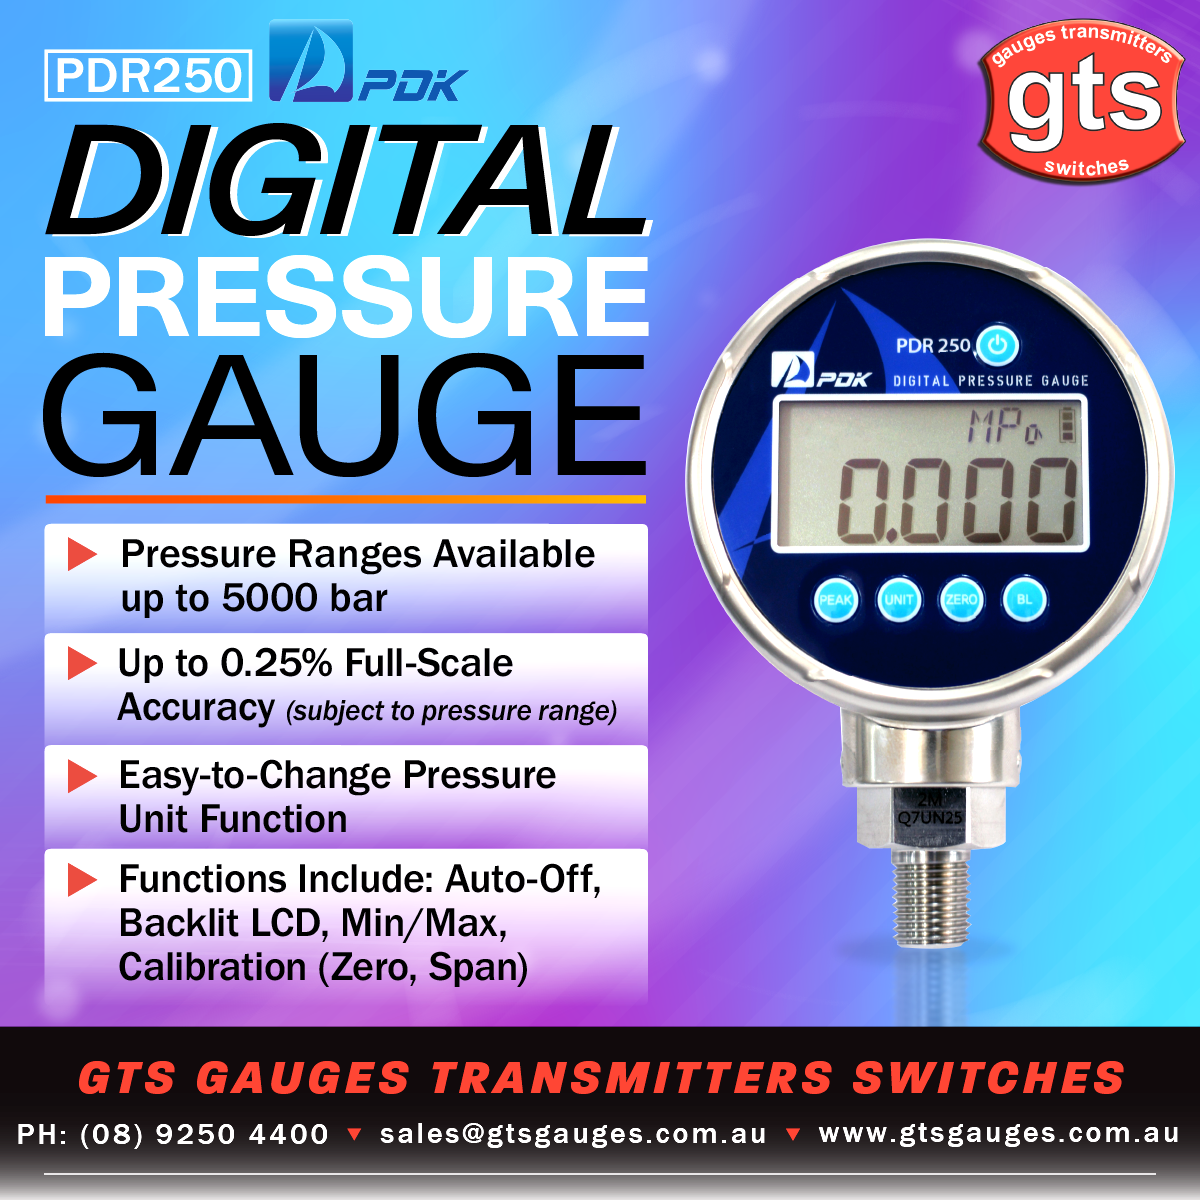 PDK PDR250 Digital Pressure Gauge